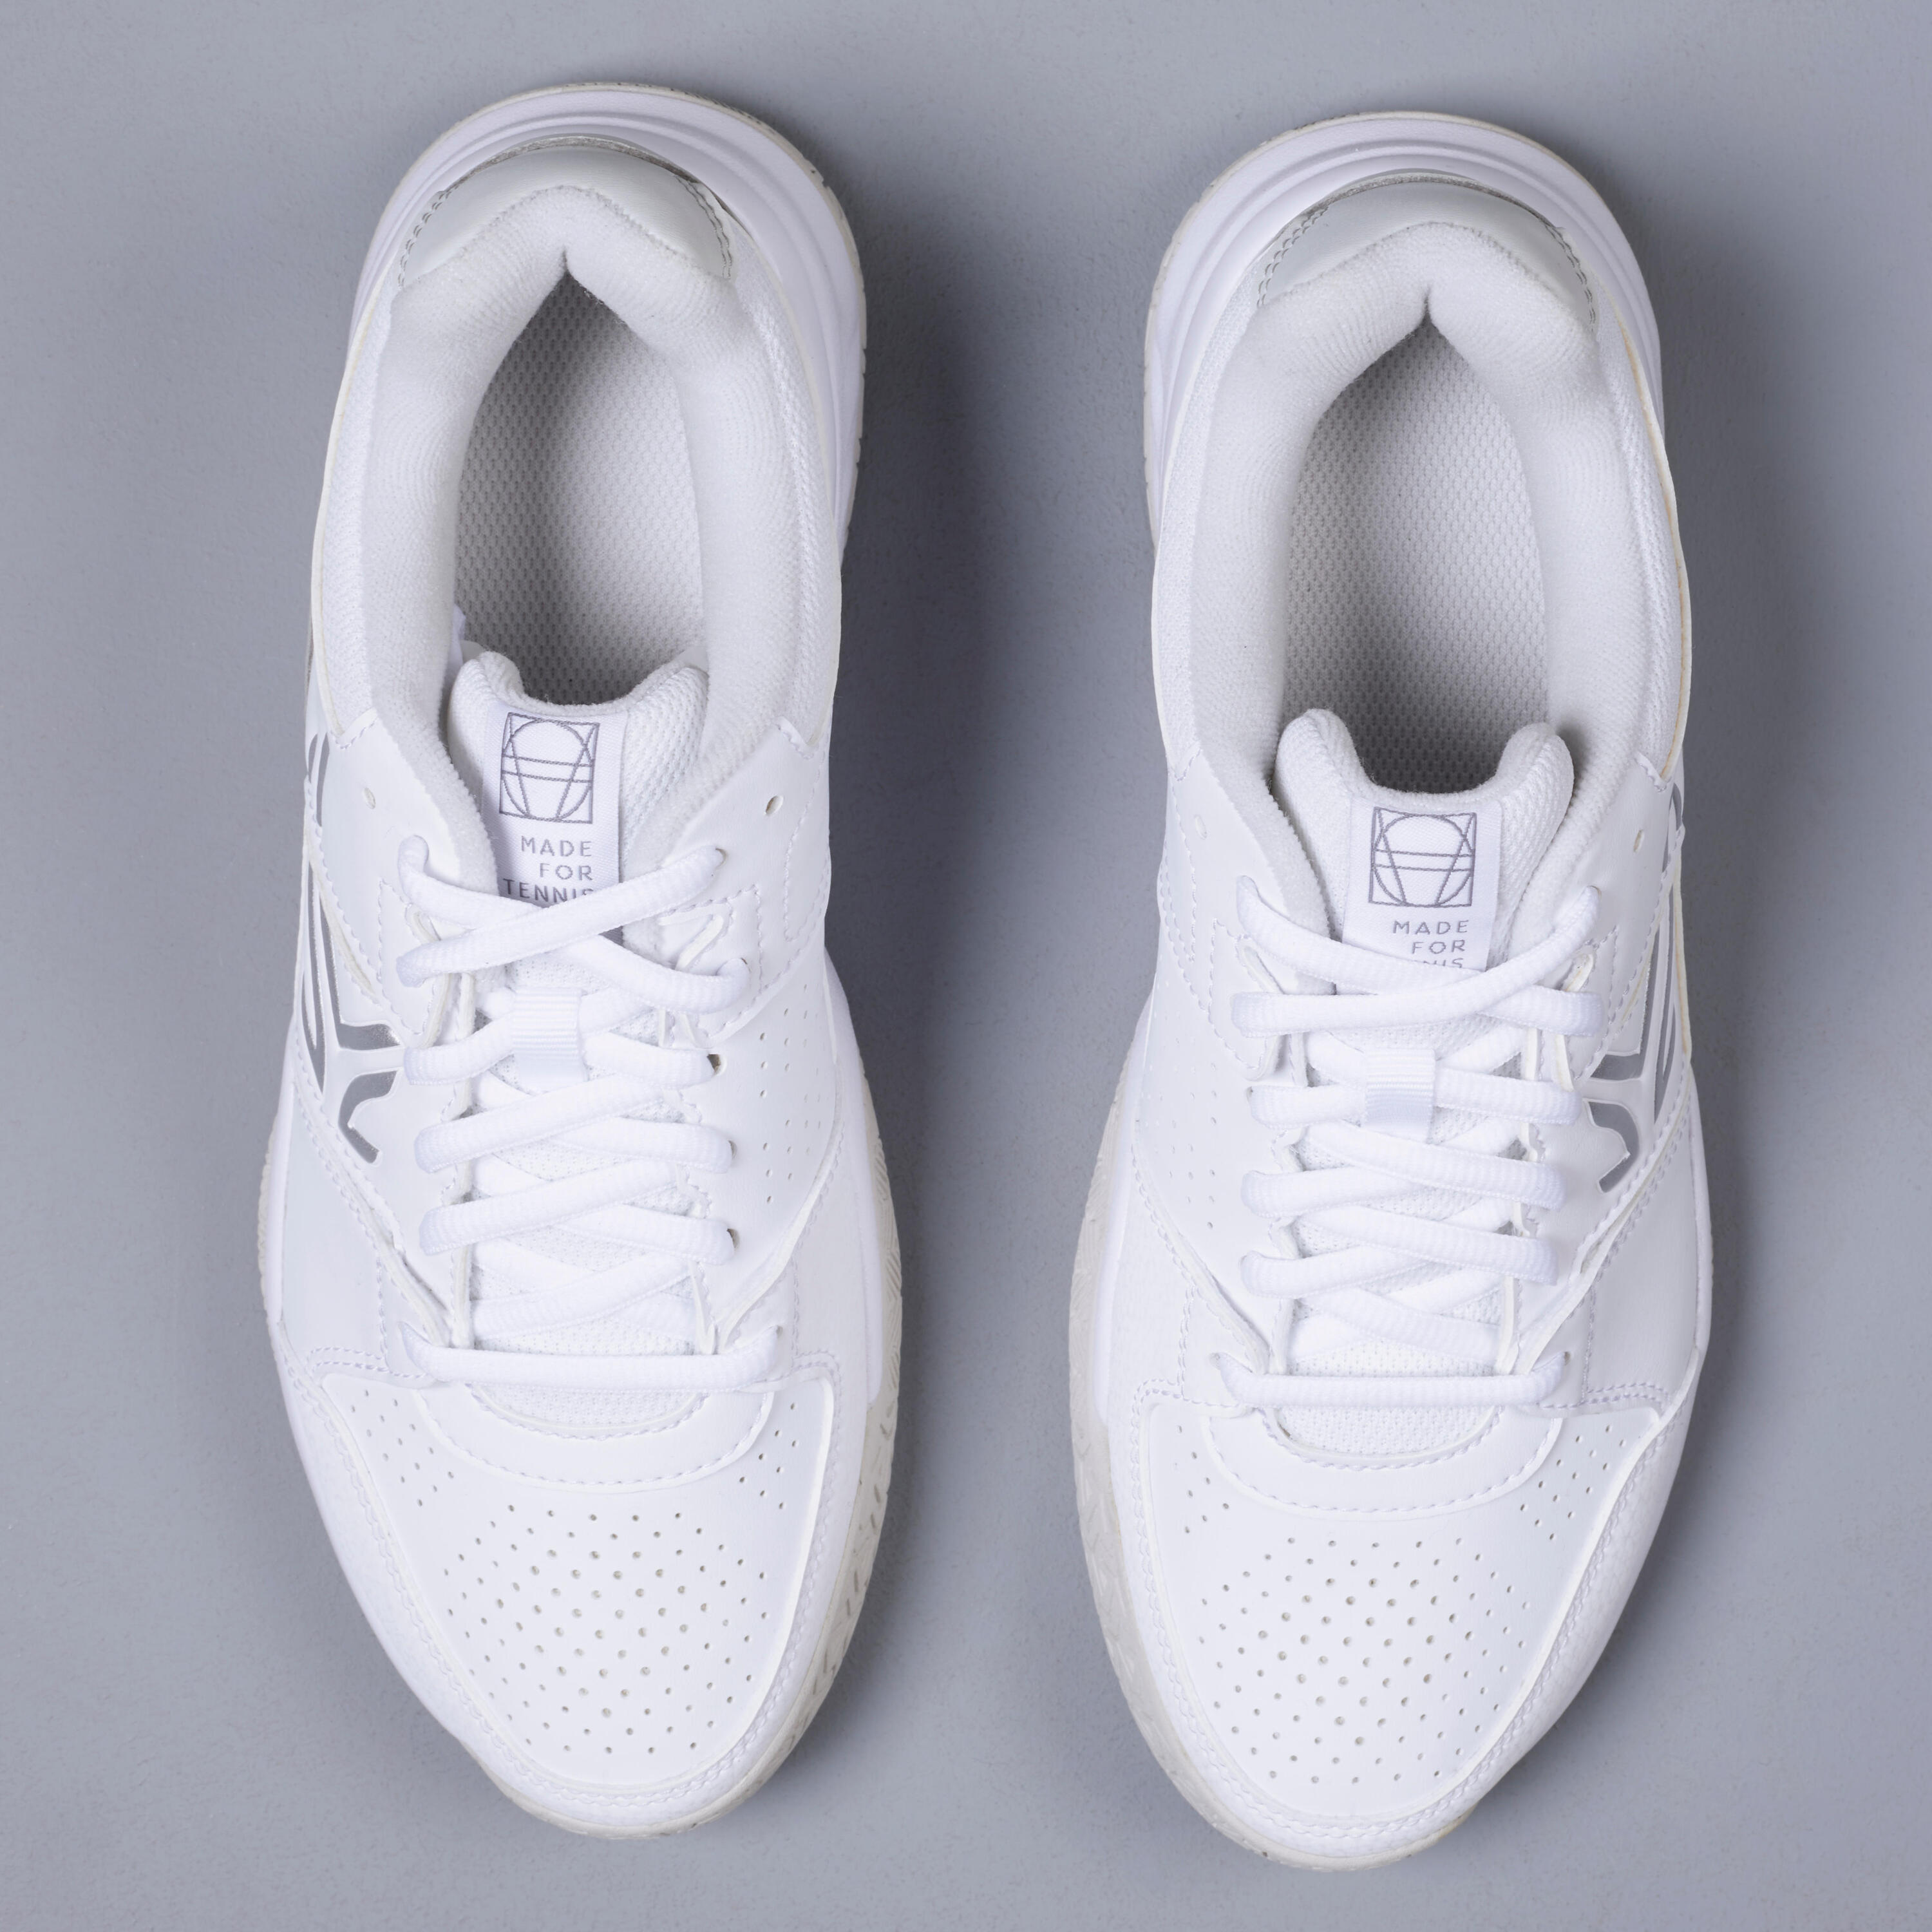 Women's Tennis Shoes TS 160 - White 8/8